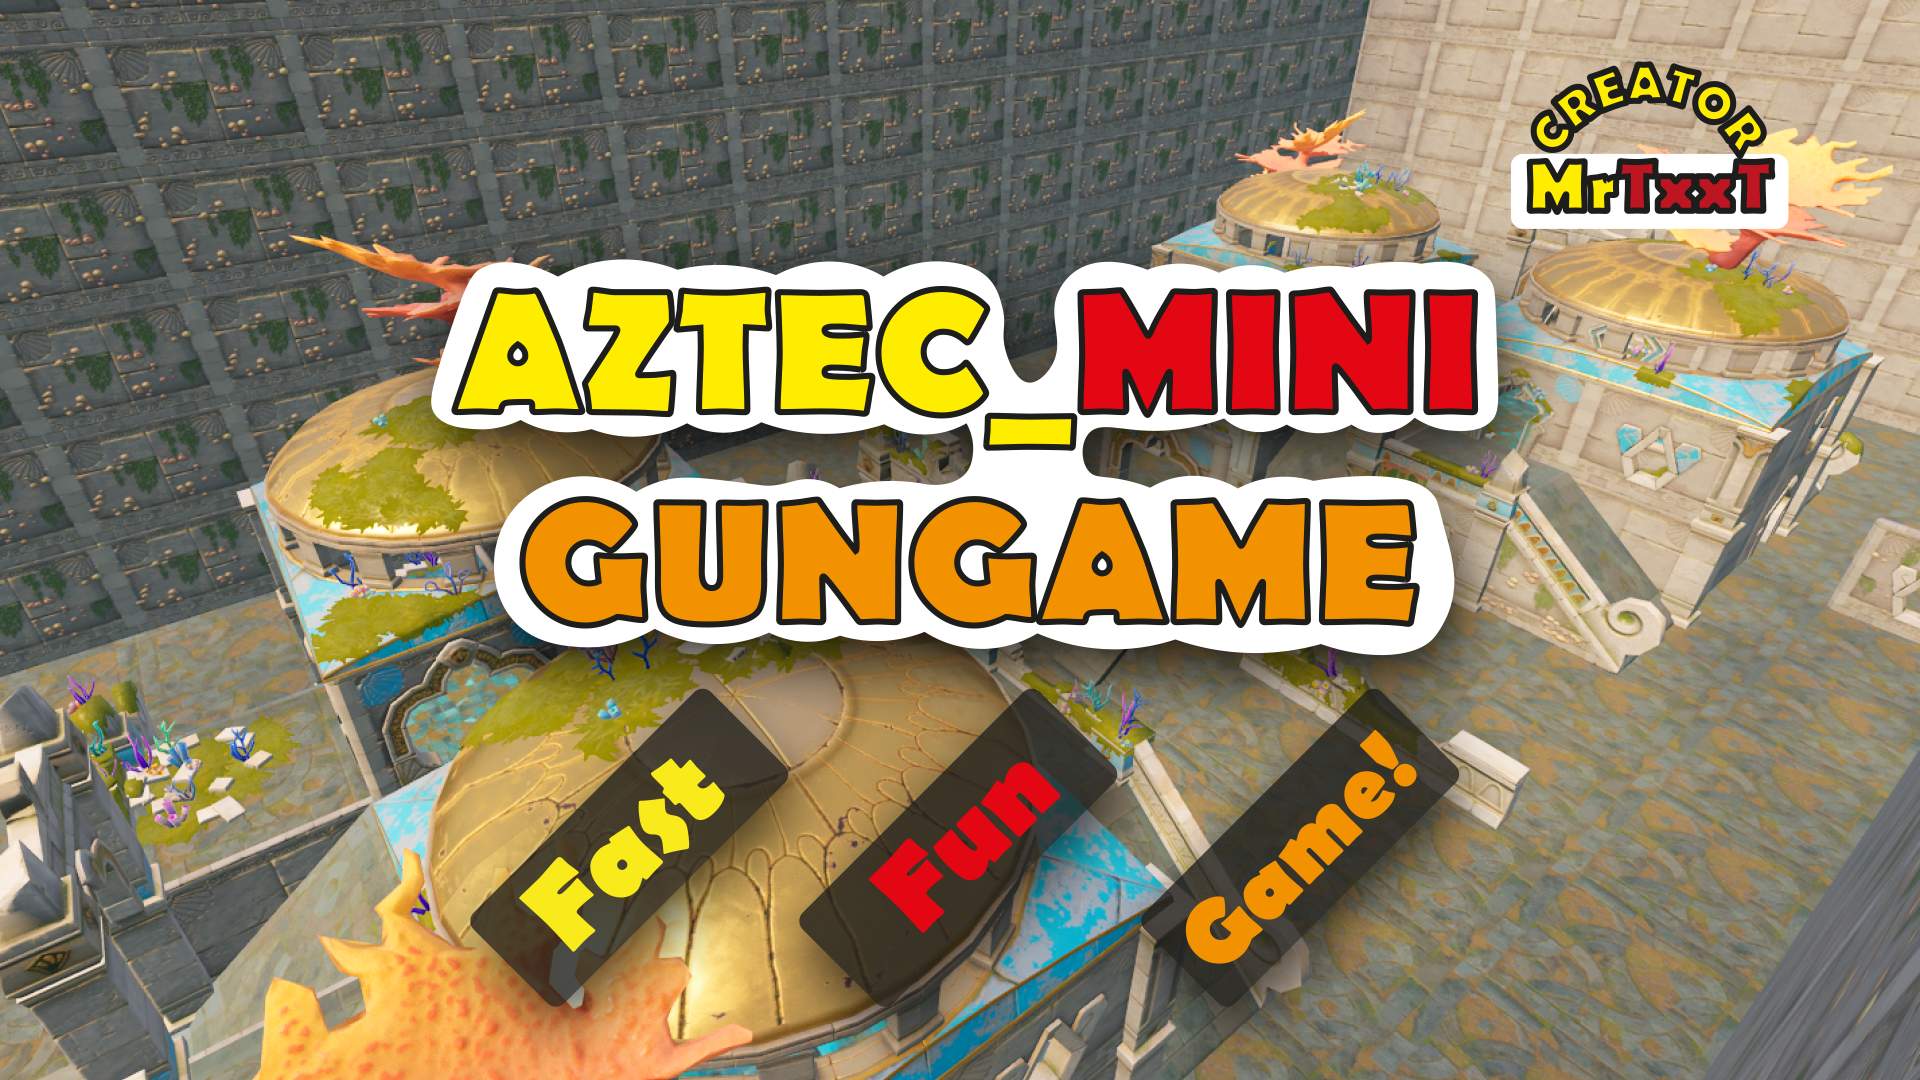 Aztec_Mini GunGame - Fortnite Creative Map Code